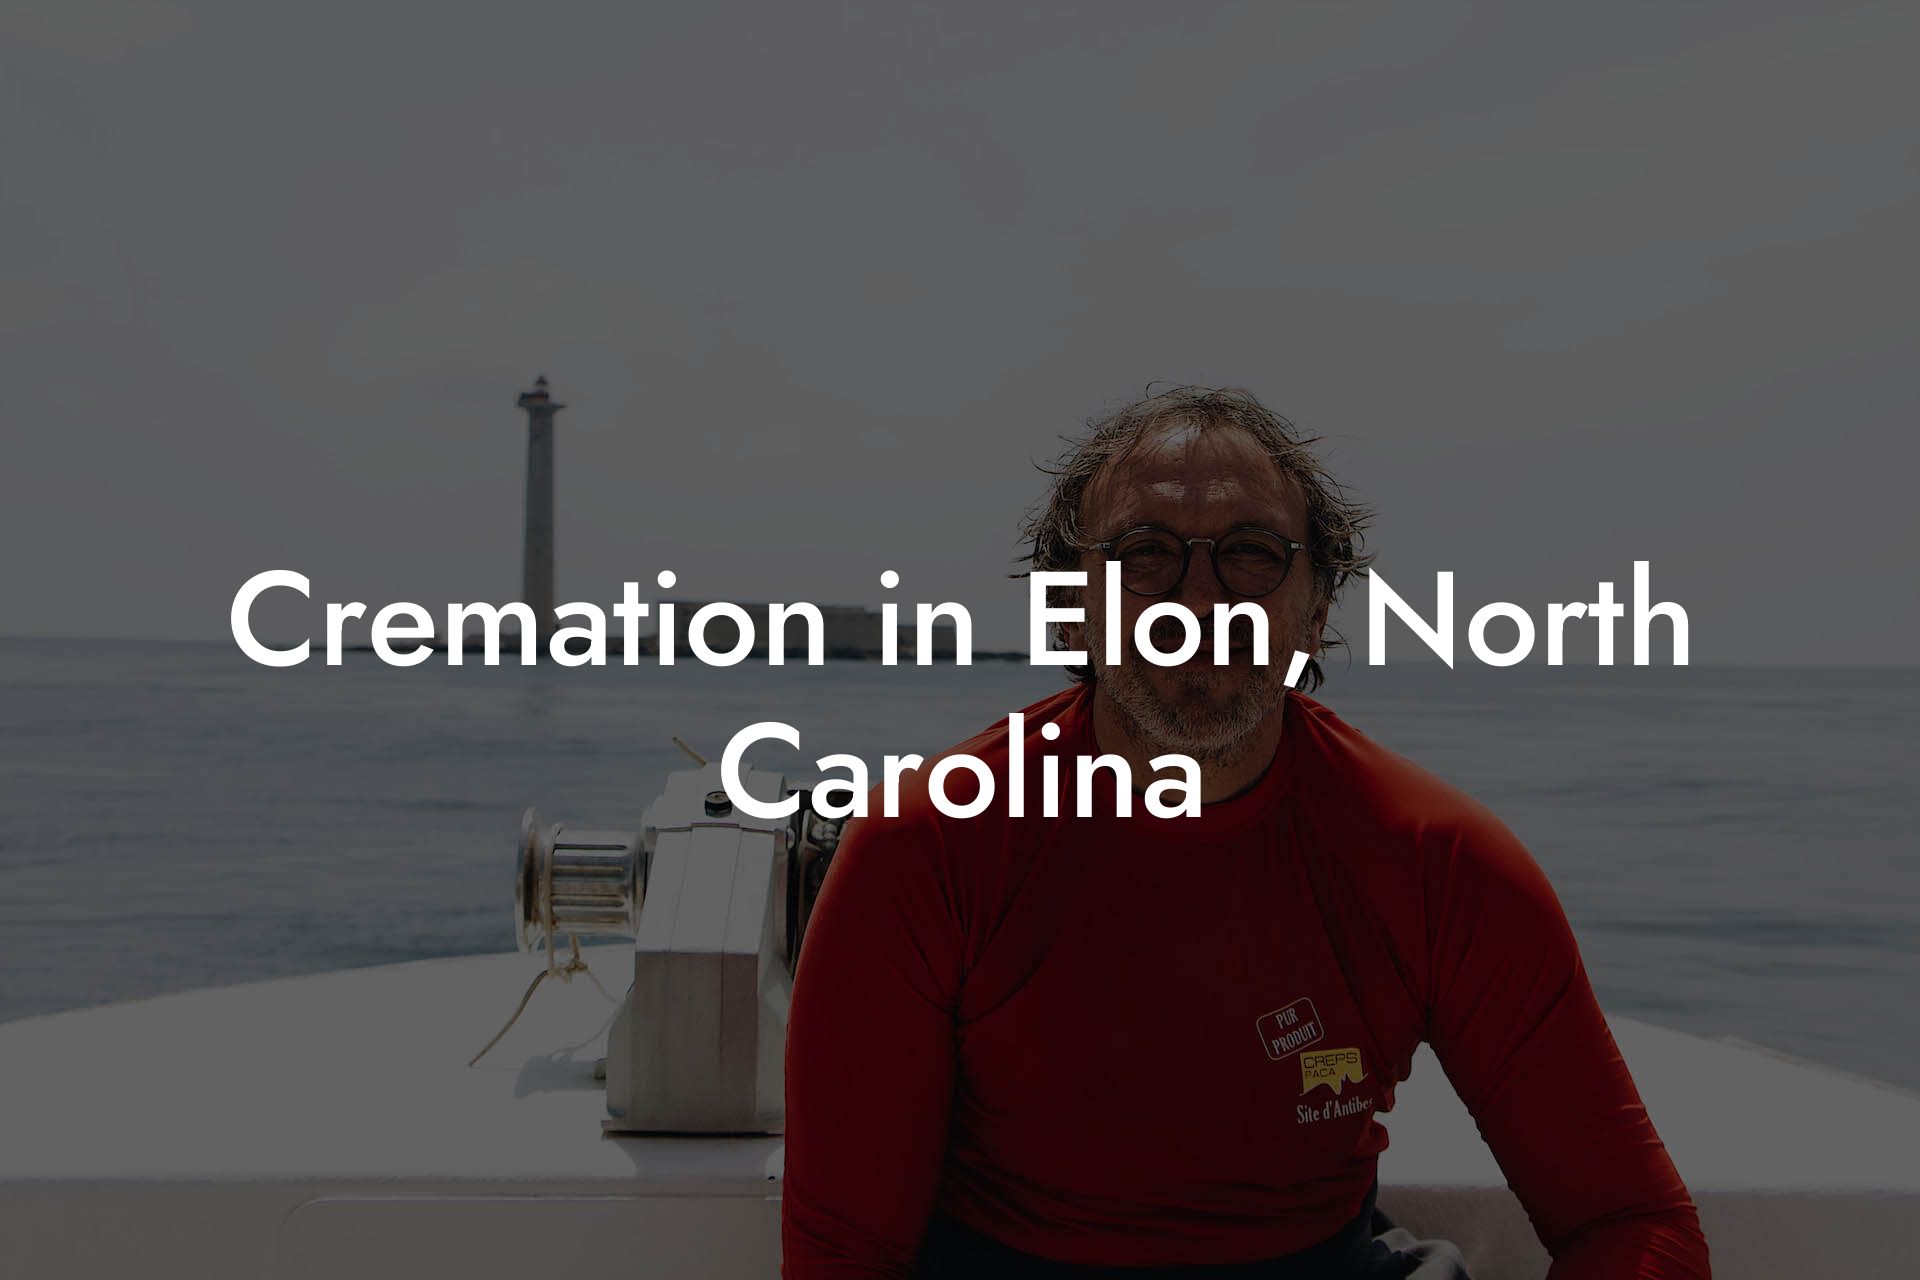 Cremation in Elon, North Carolina